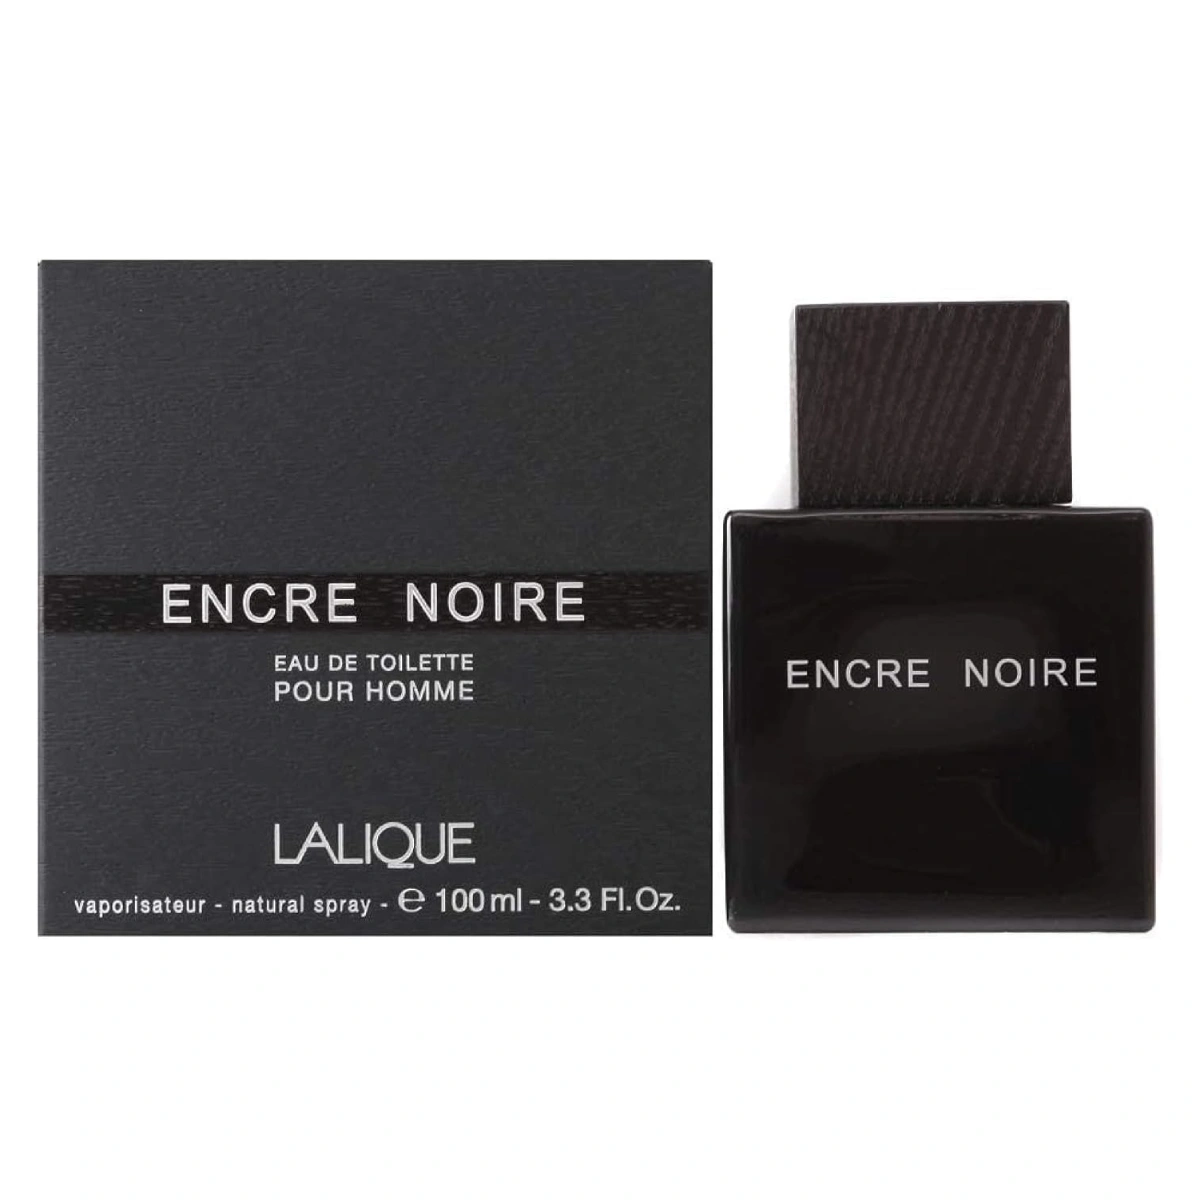 Bottle of Lalique Encre Noire fragrance against a pristine white background